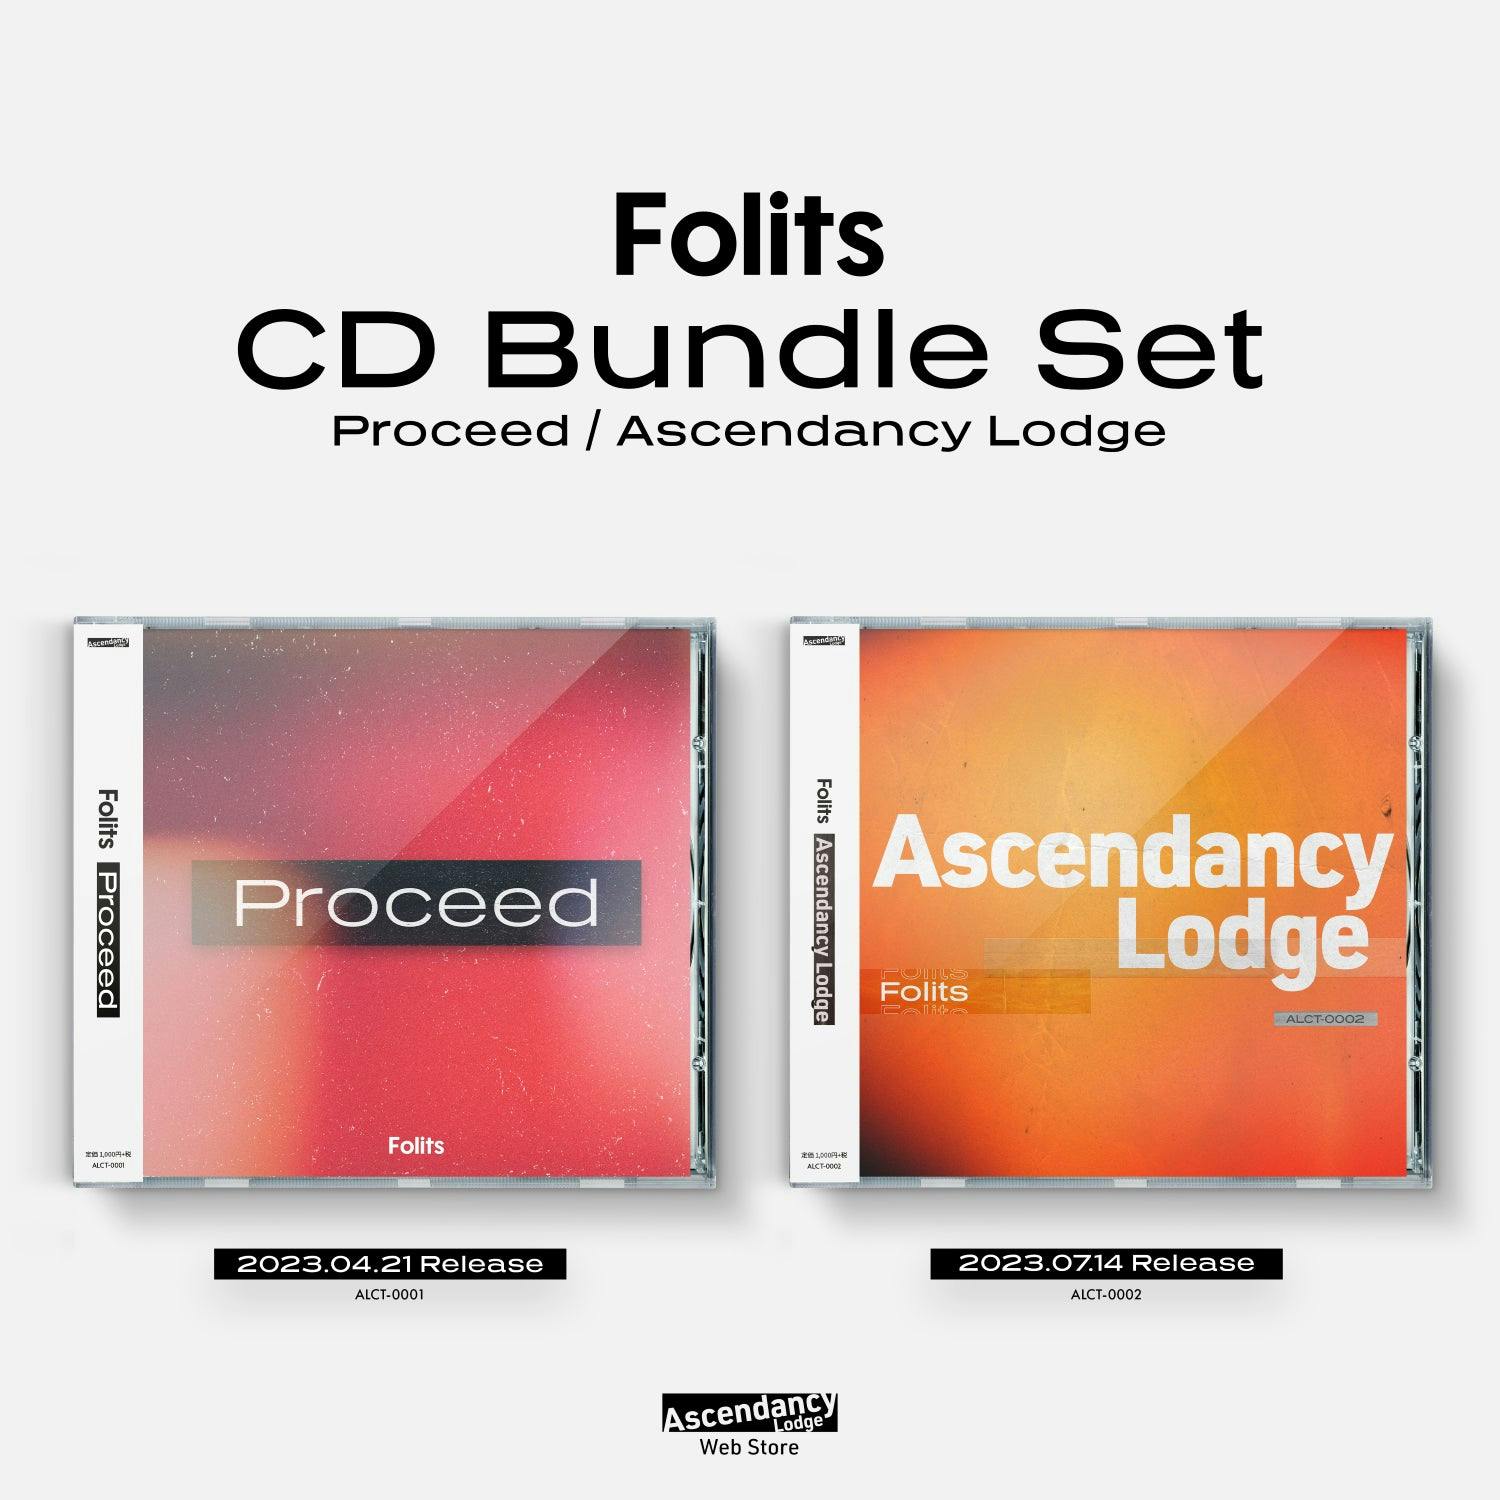 Folits CD Bundle Set (Proceed / Ascendancy Lodge) - Folits-CDBundle